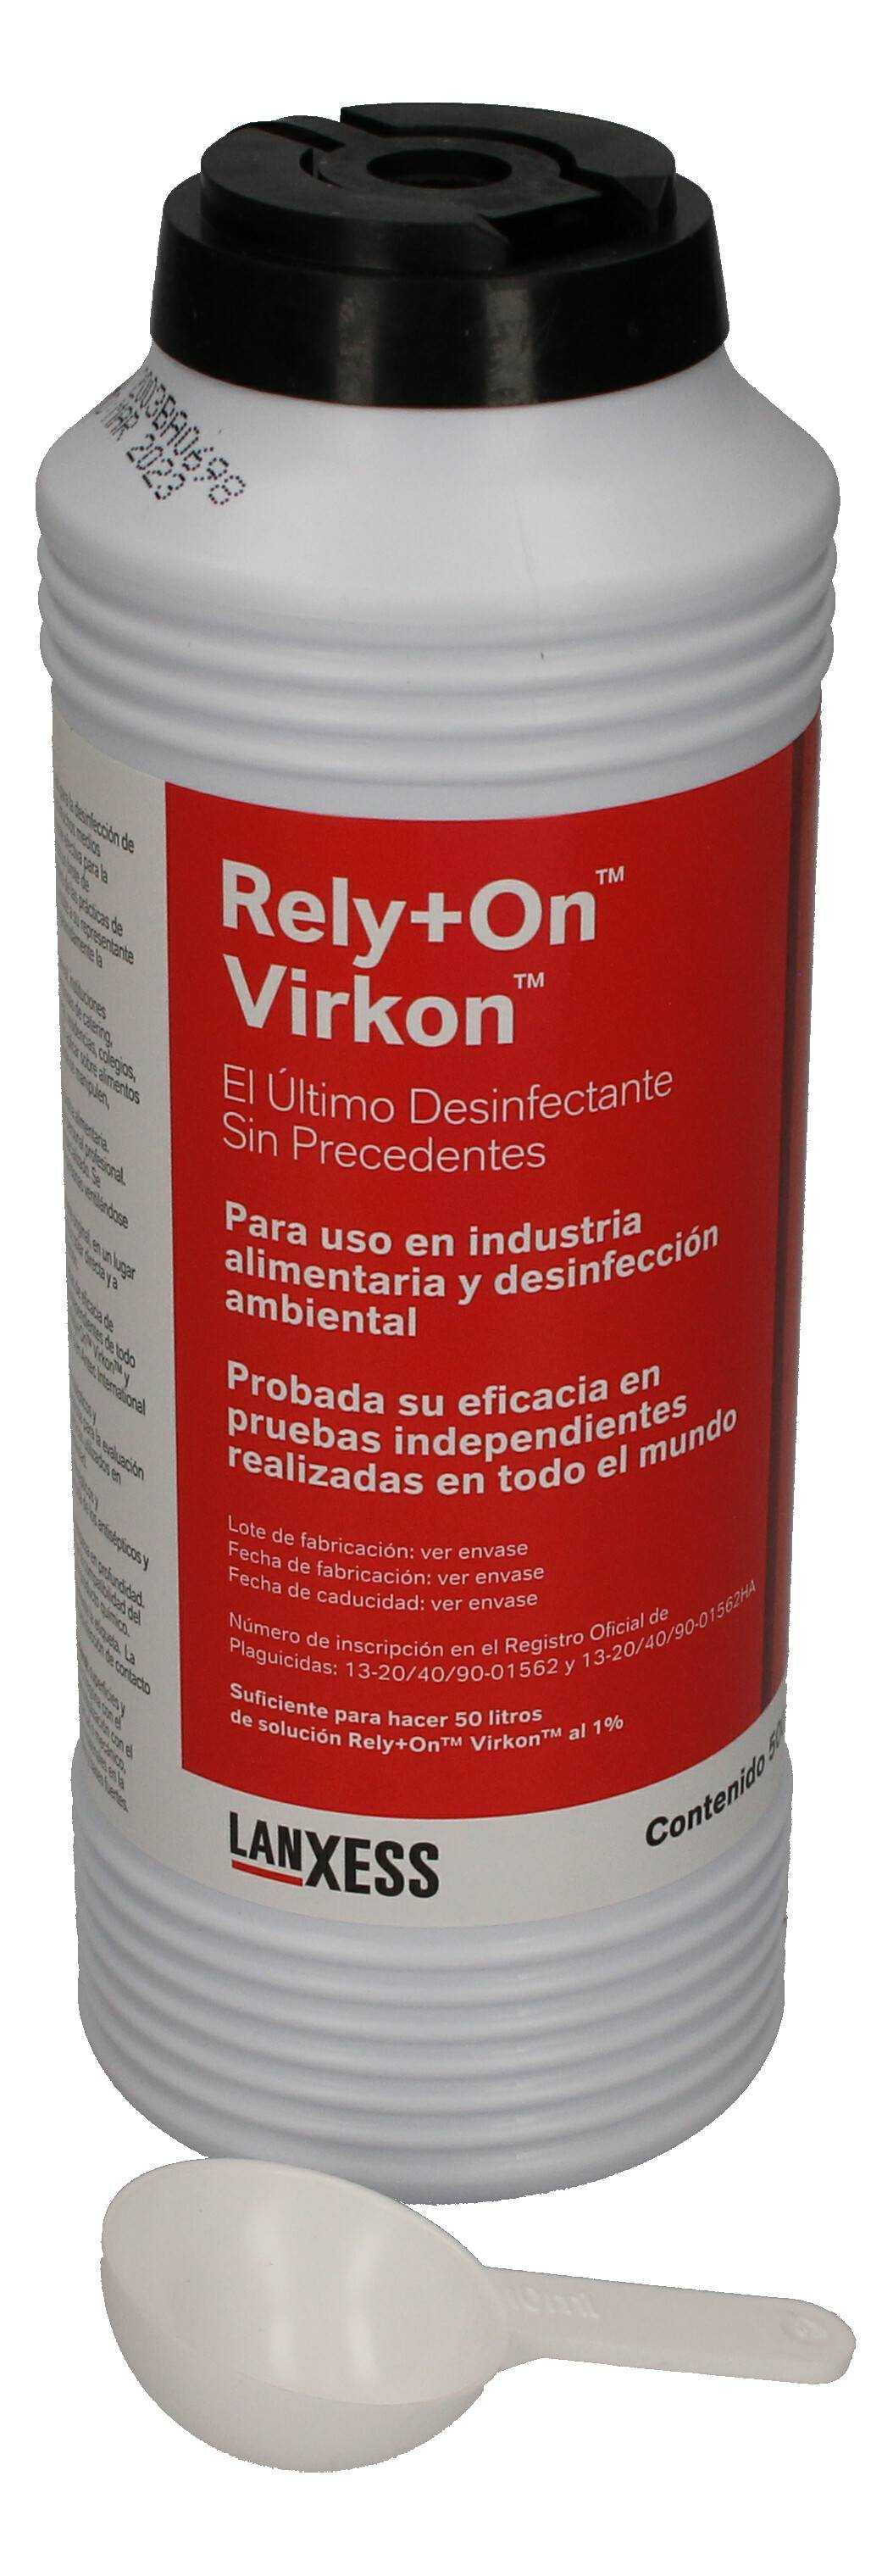 RELY+ON VIRKON High spectrum surface disinfectant Bottle 500 gr. - Image 1